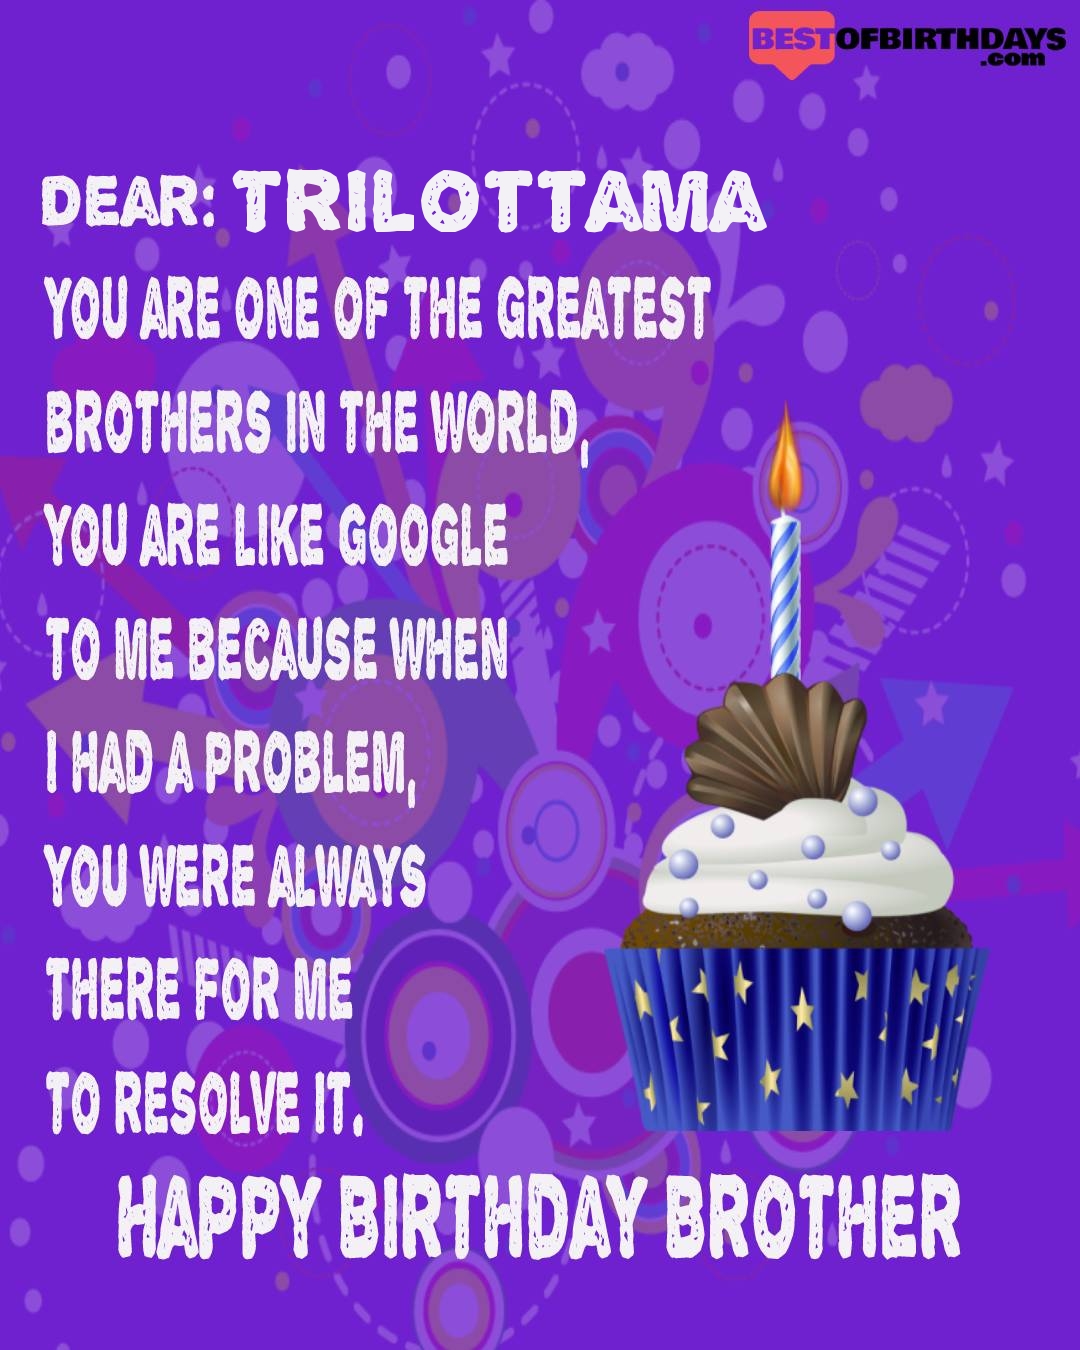 Happy birthday trilottama bhai brother bro